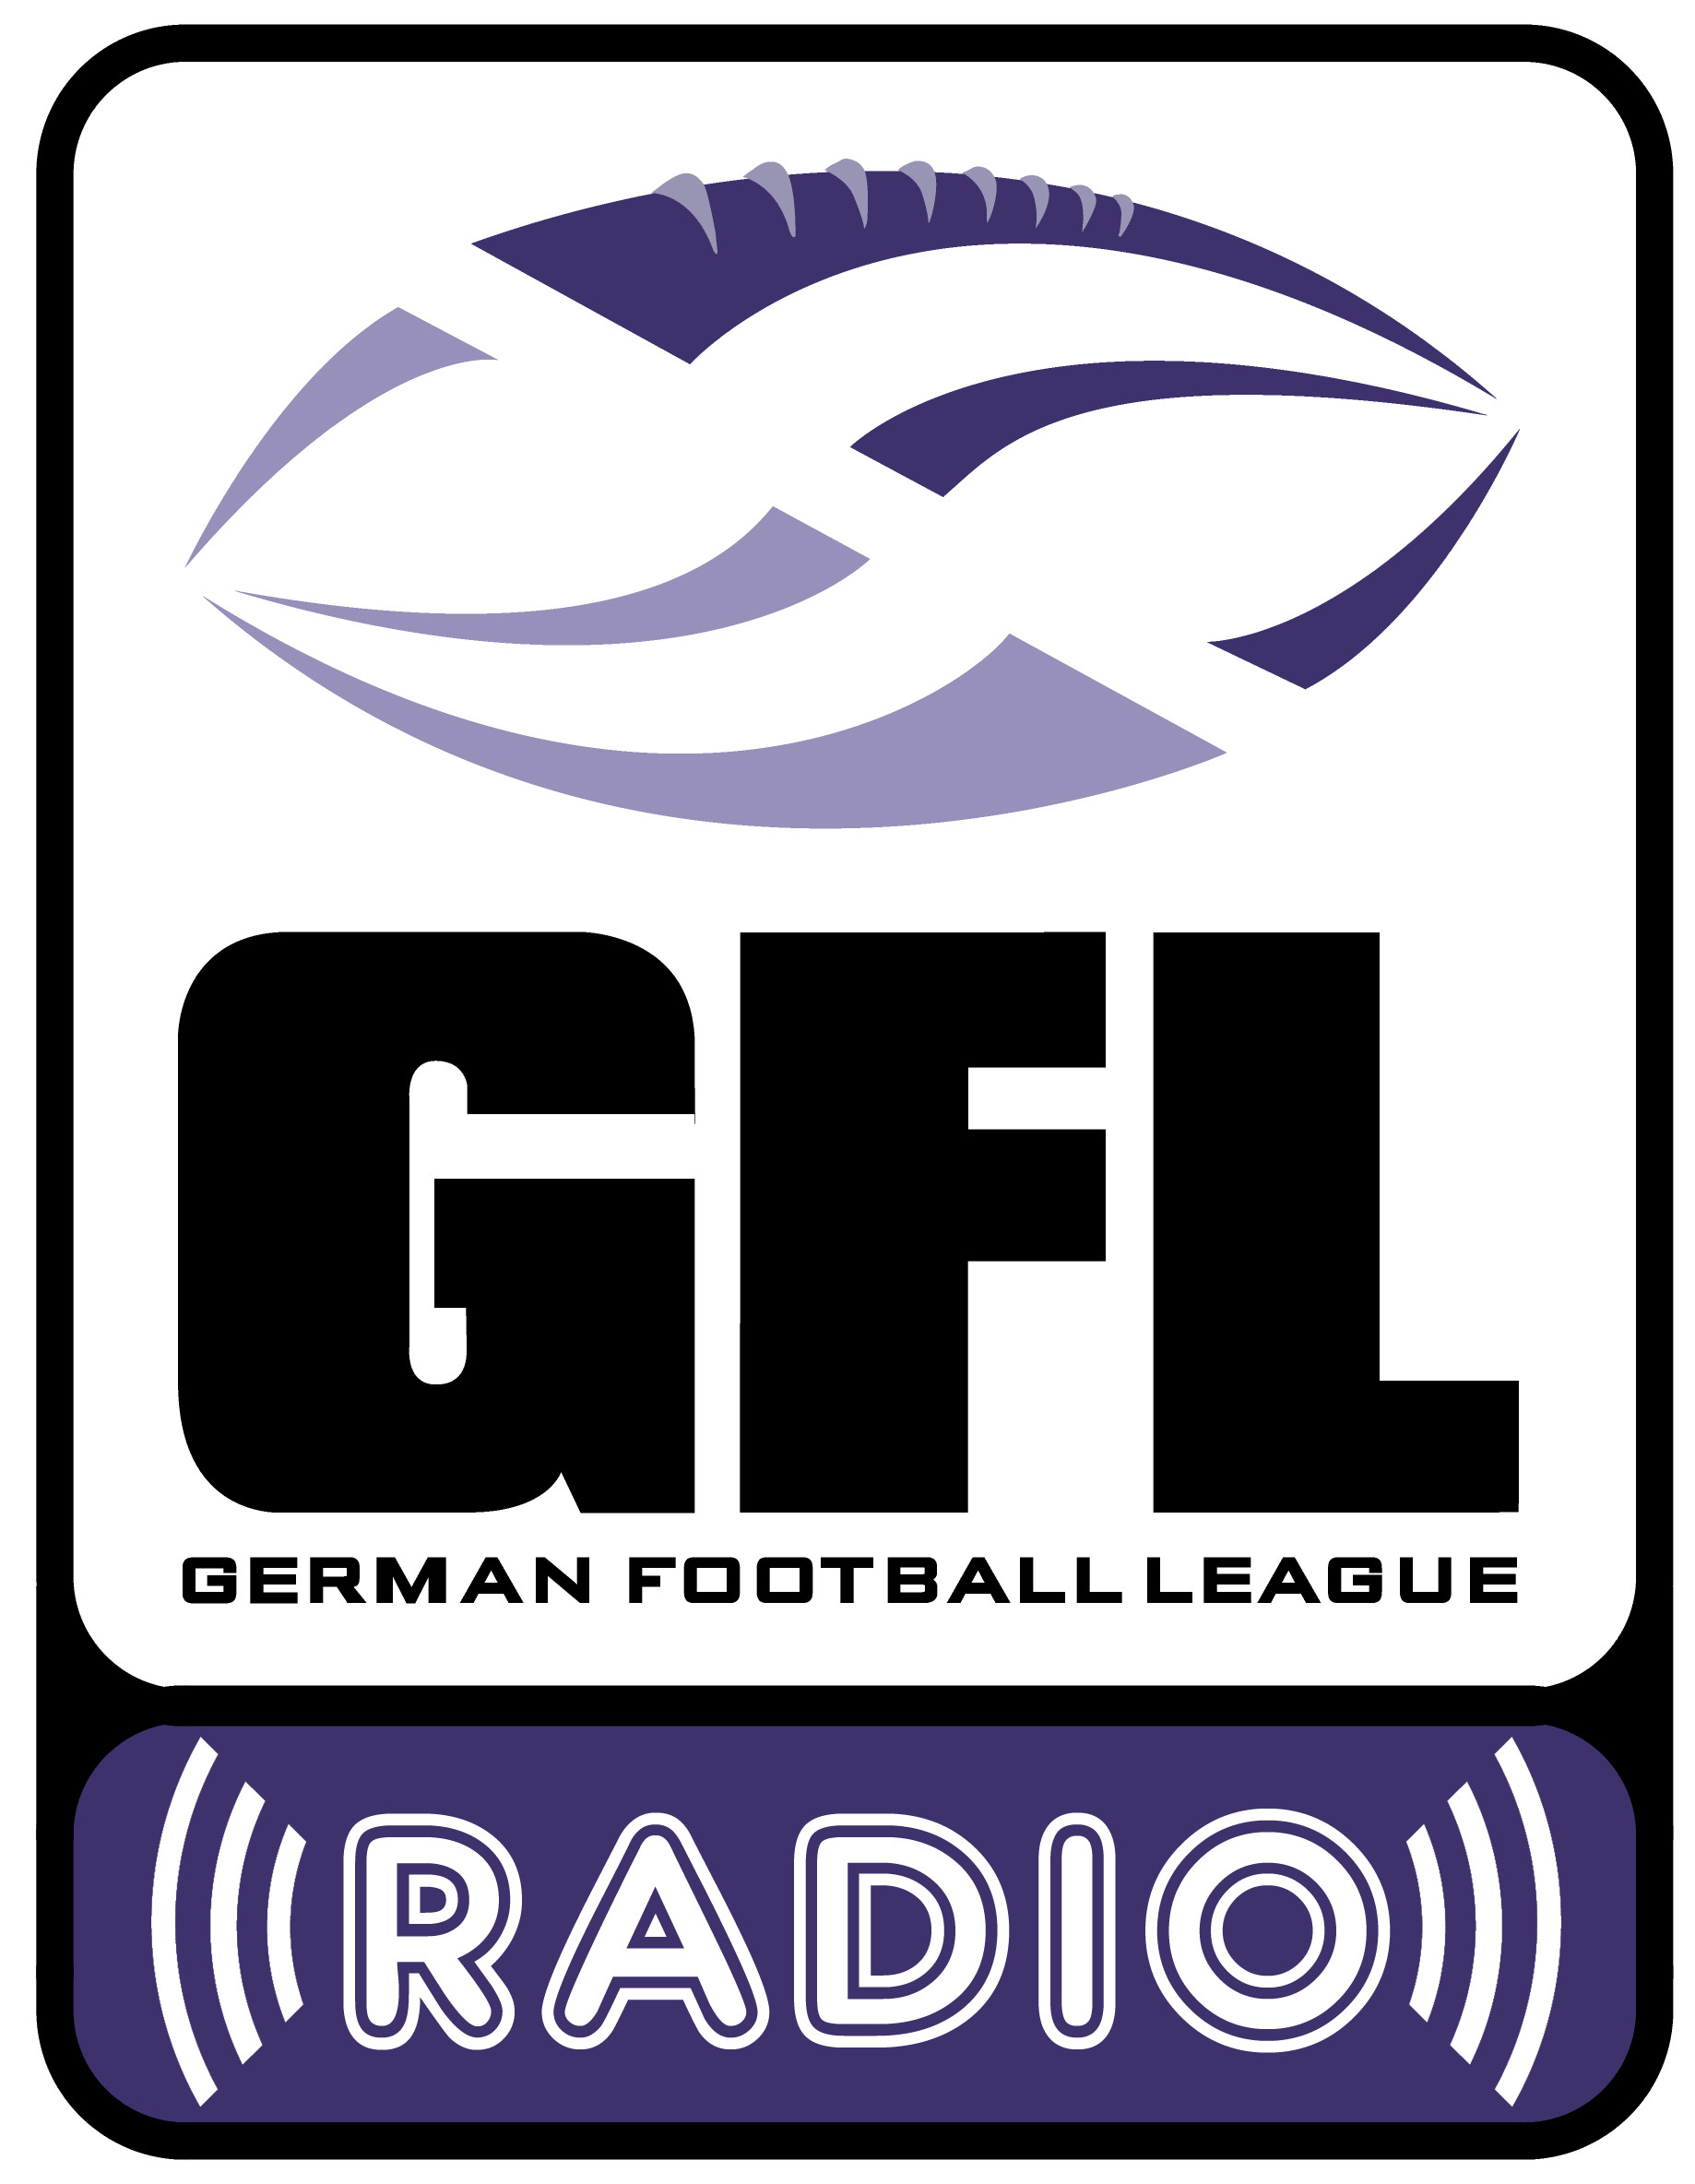 GFL-Radio